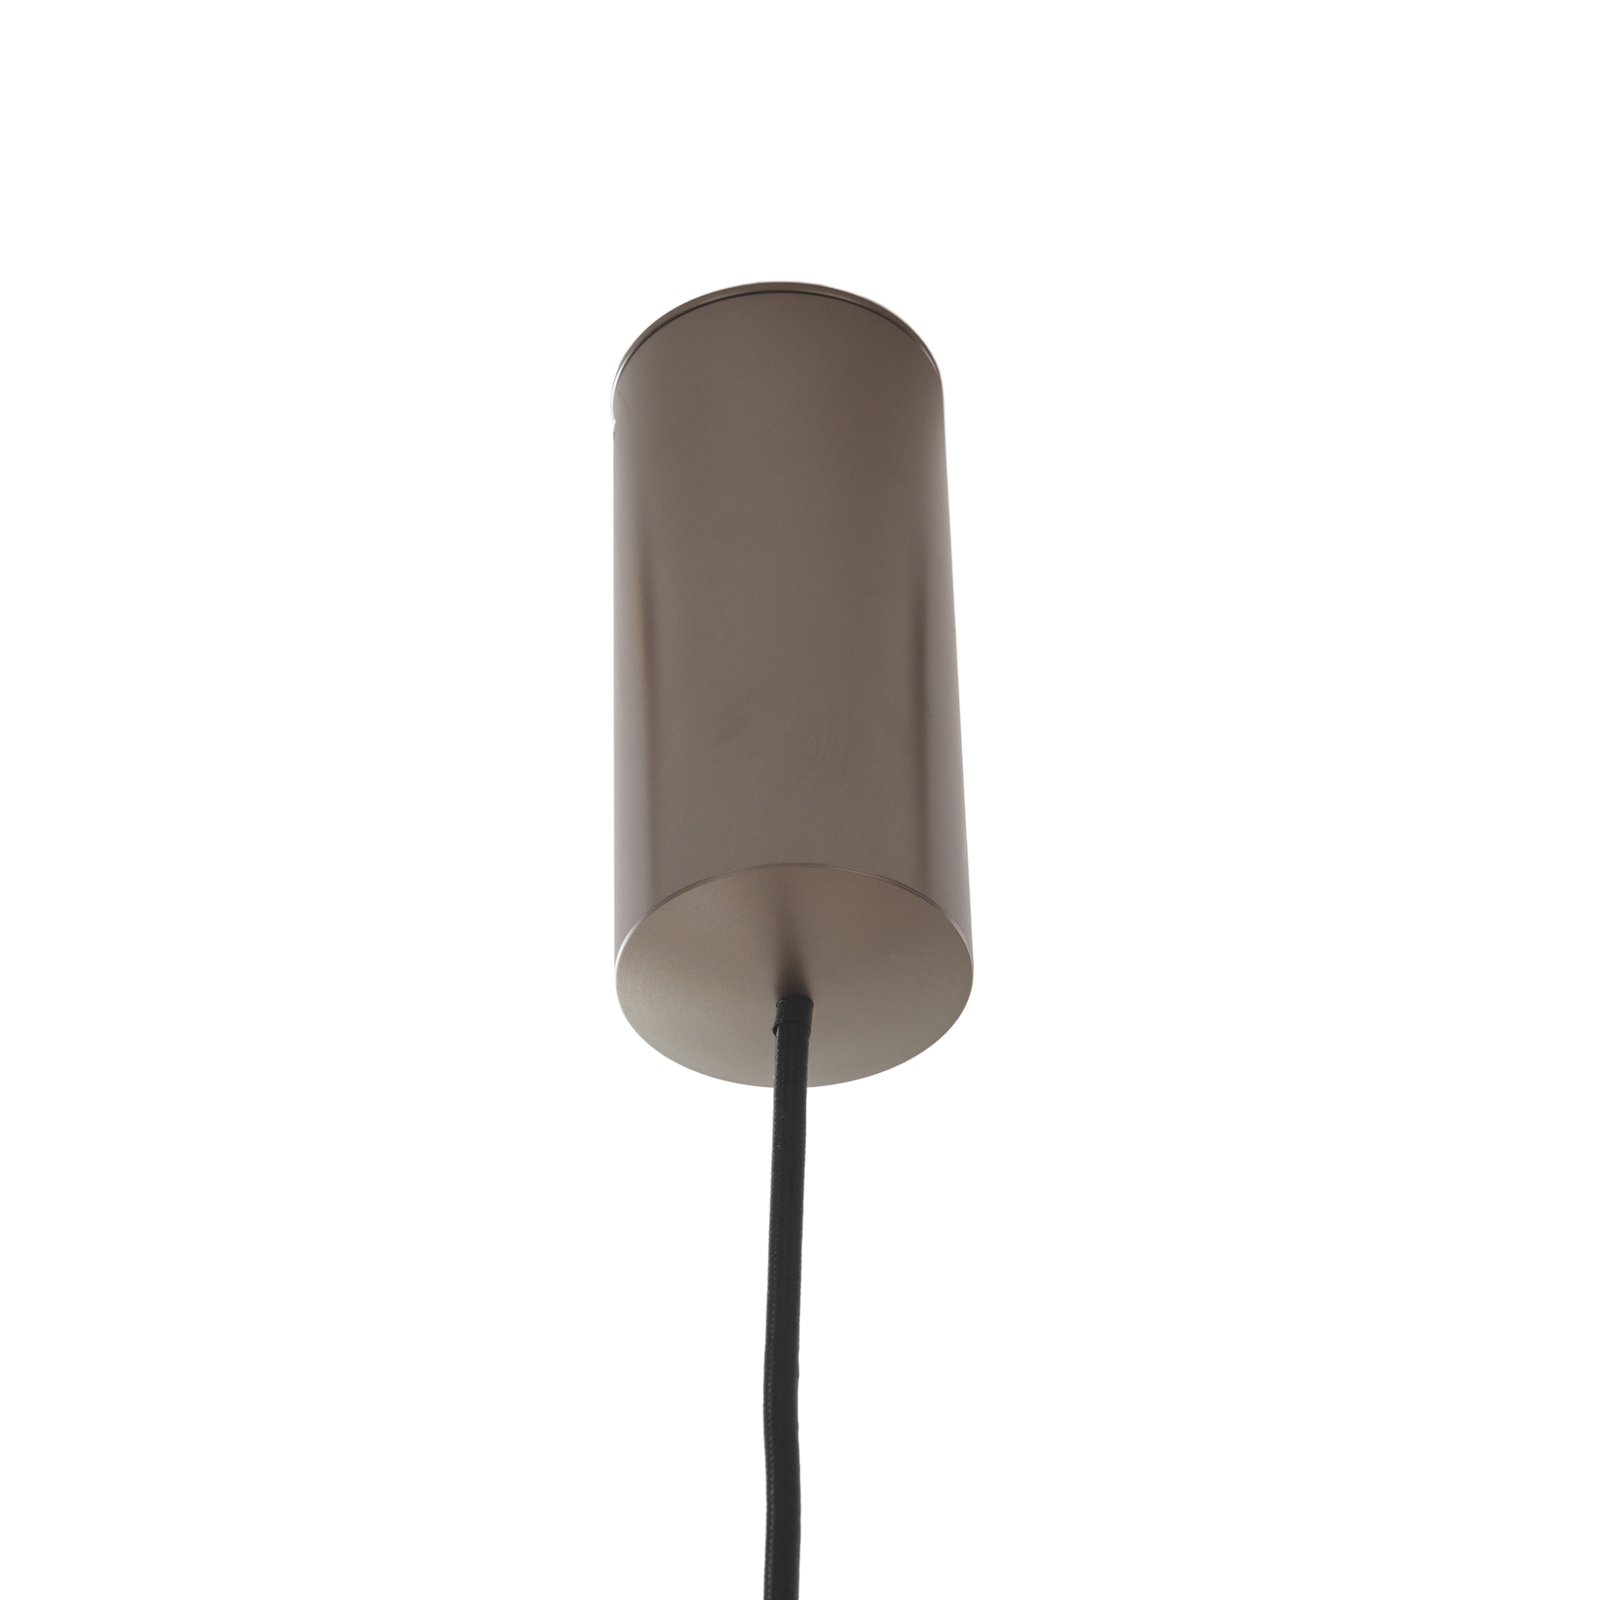 Lucande LED pendant light Plarion, nickel-coloured, aluminium, Ø 9 cm